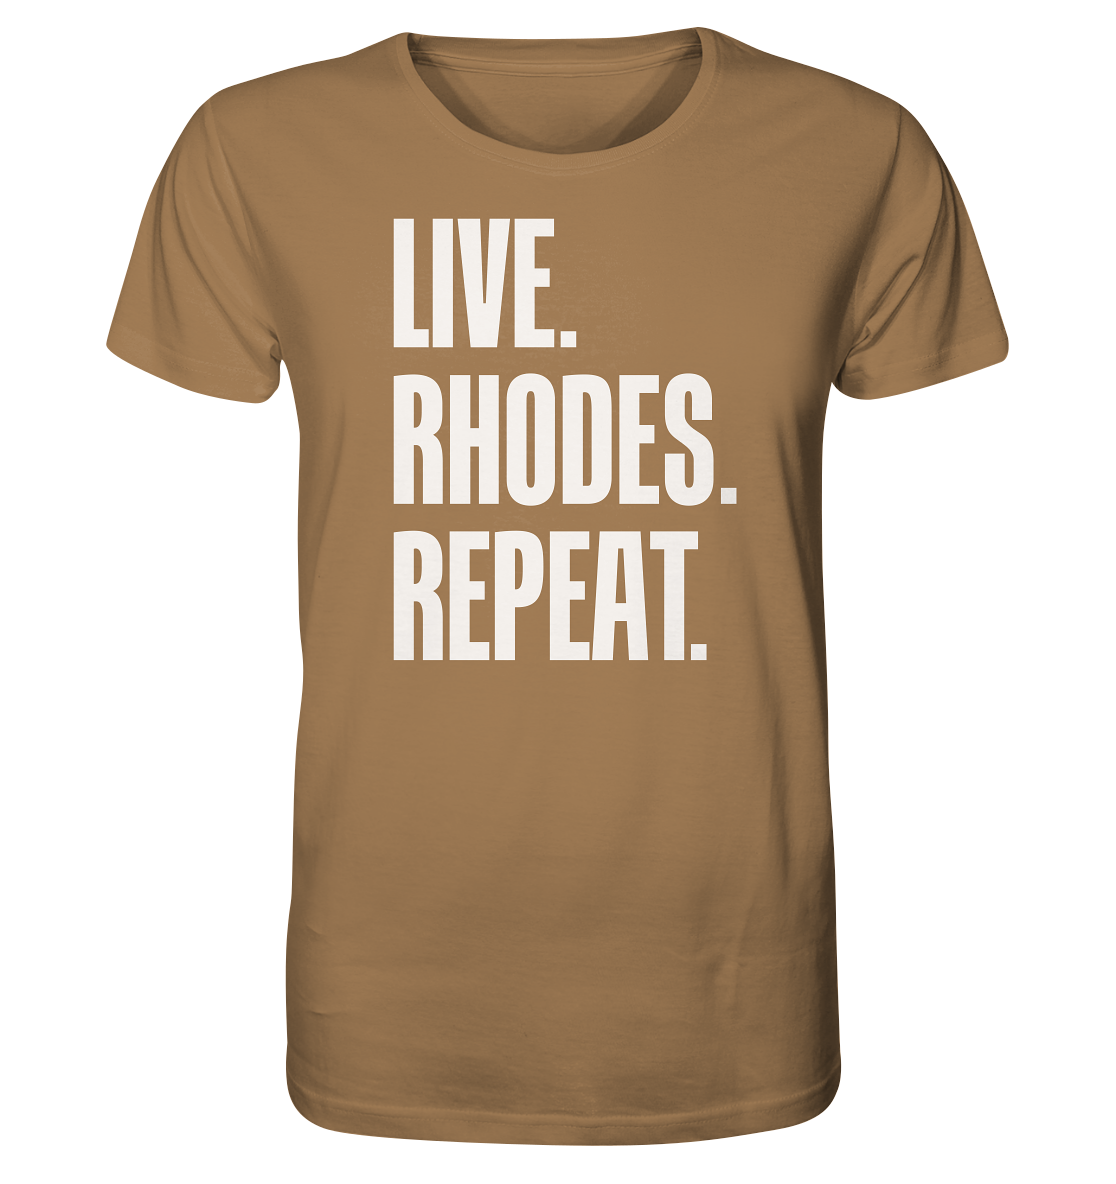 LIVE. RHODES. REPEAT. -Organic shirt